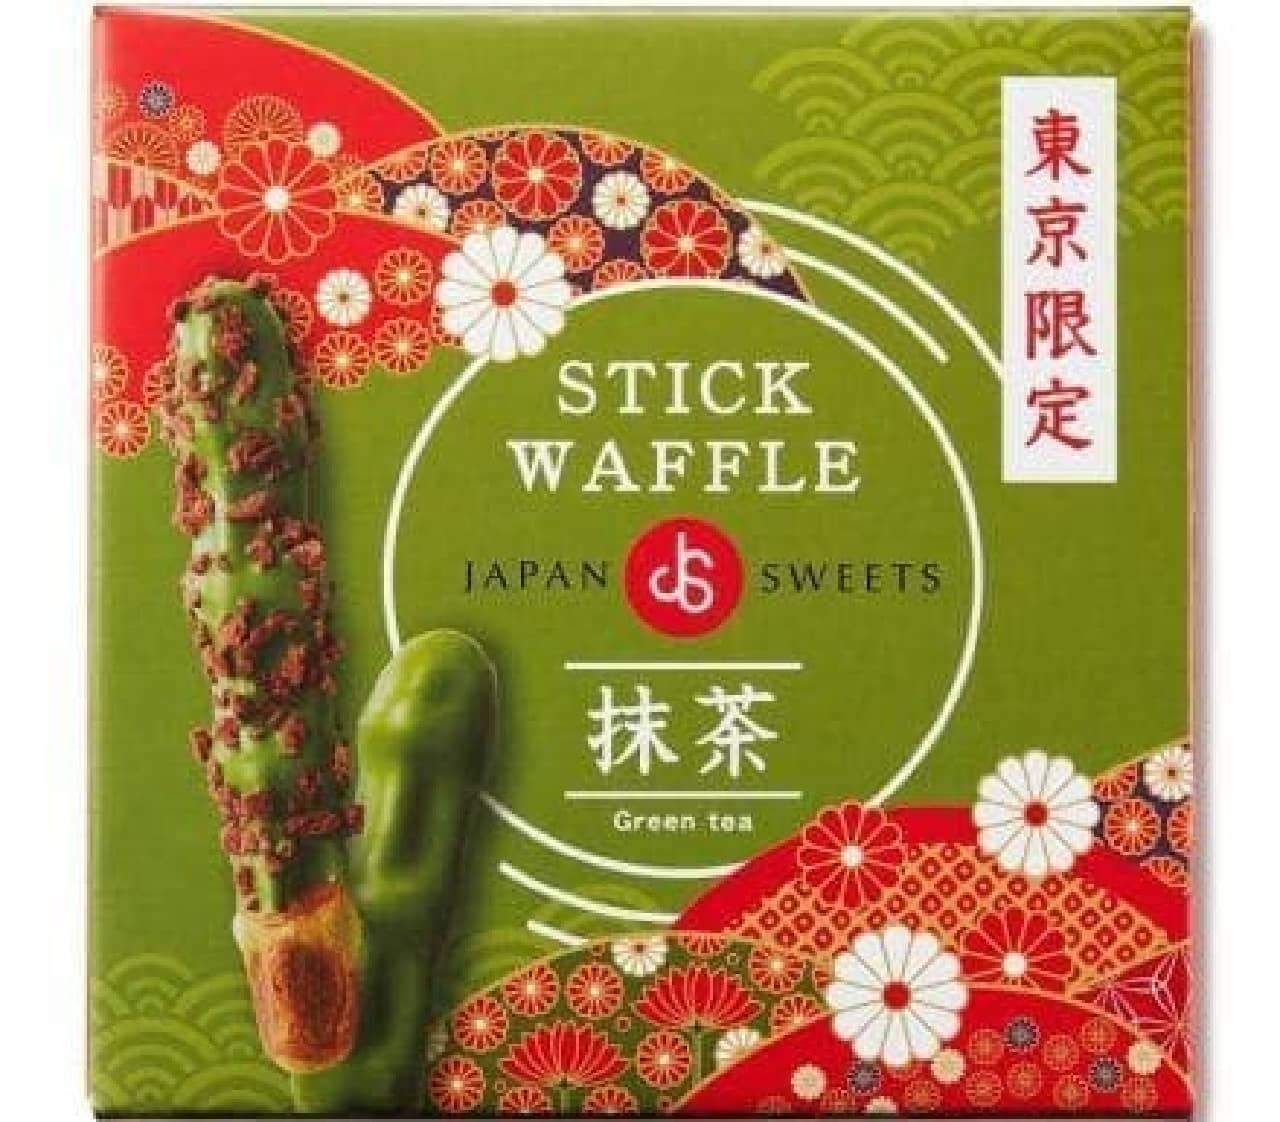 Y.L. "Stick Waffle Green Tea" package